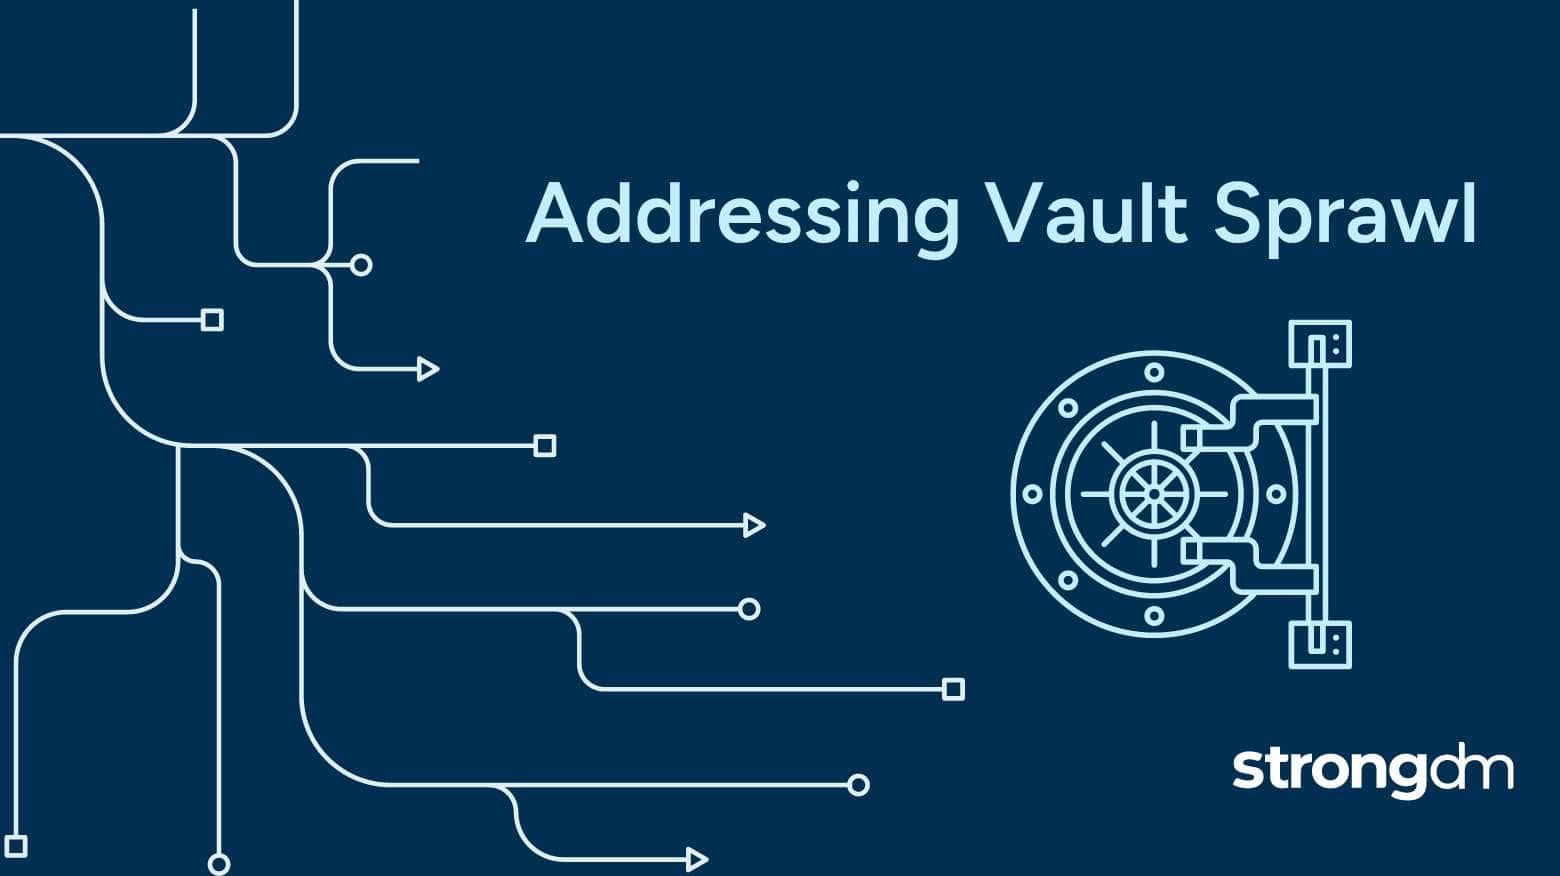 Addressing Vault Sprawl: How To Manage Multiple Secret Vaults